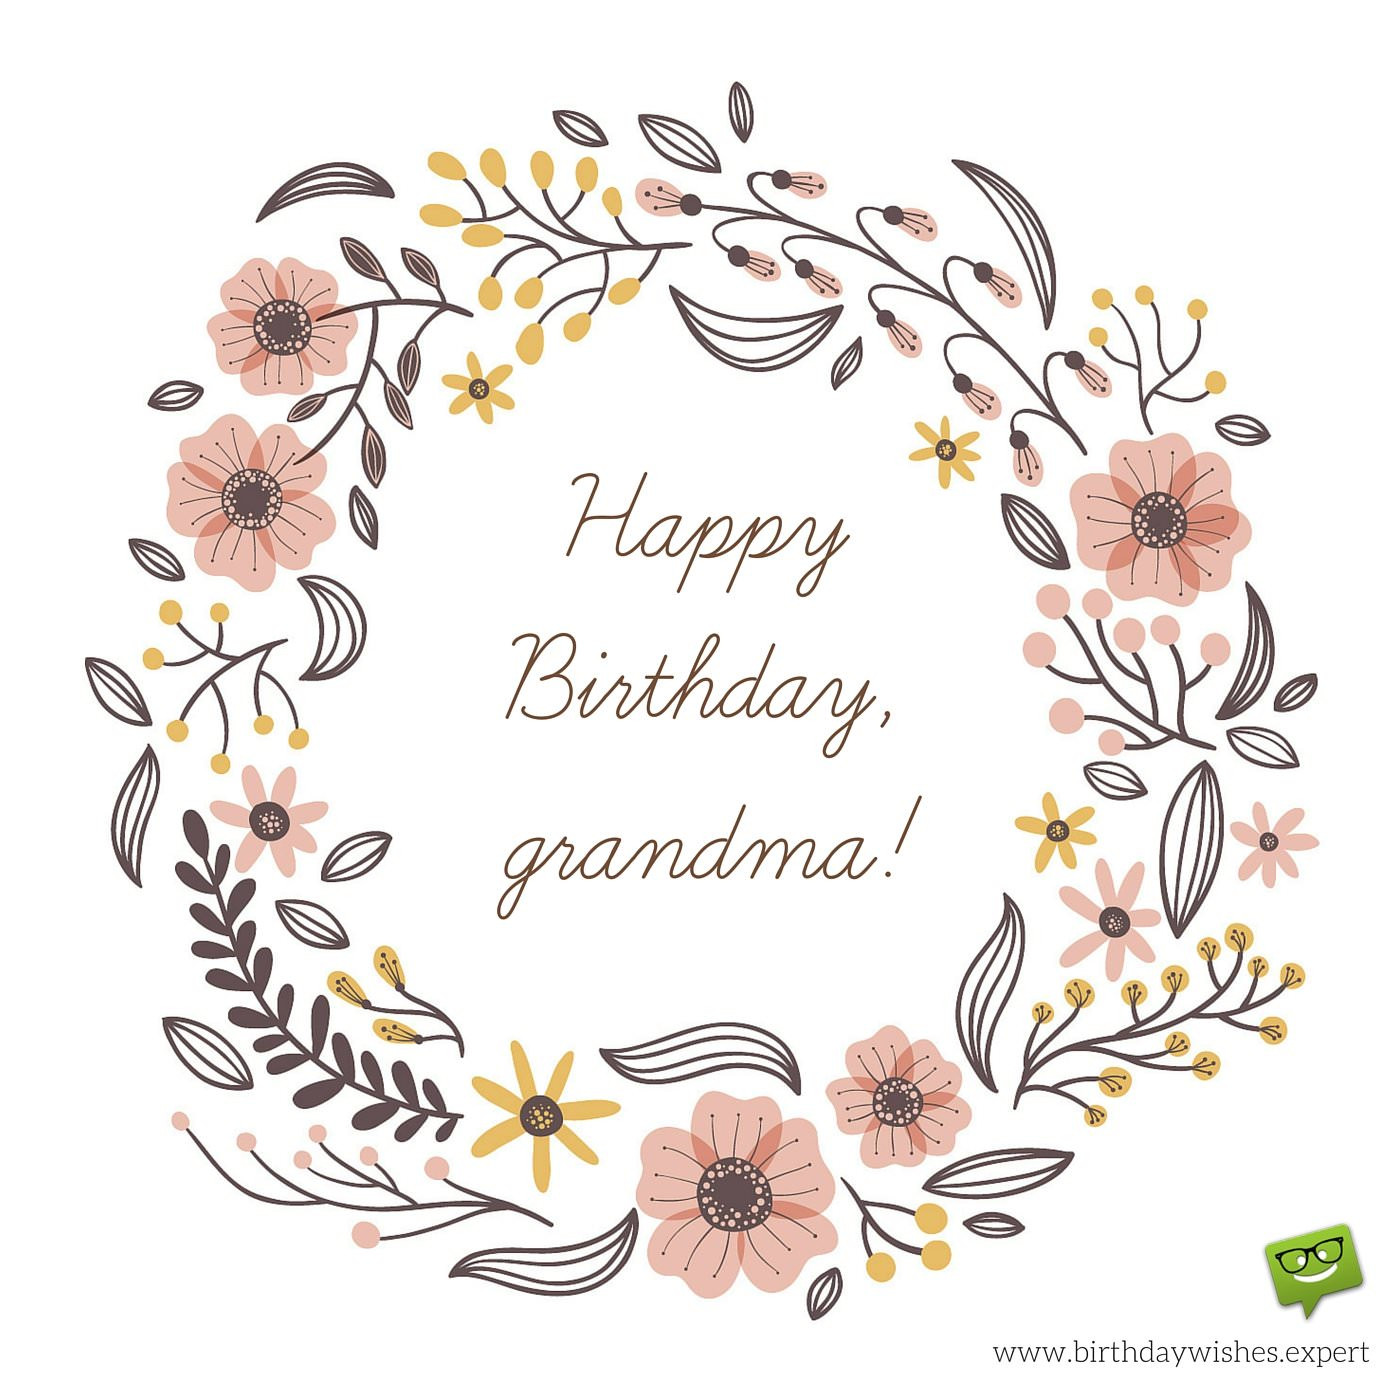 Happy Birthday Grandma Cards
 Happy Birthday Grandma image with hand drawn flowers